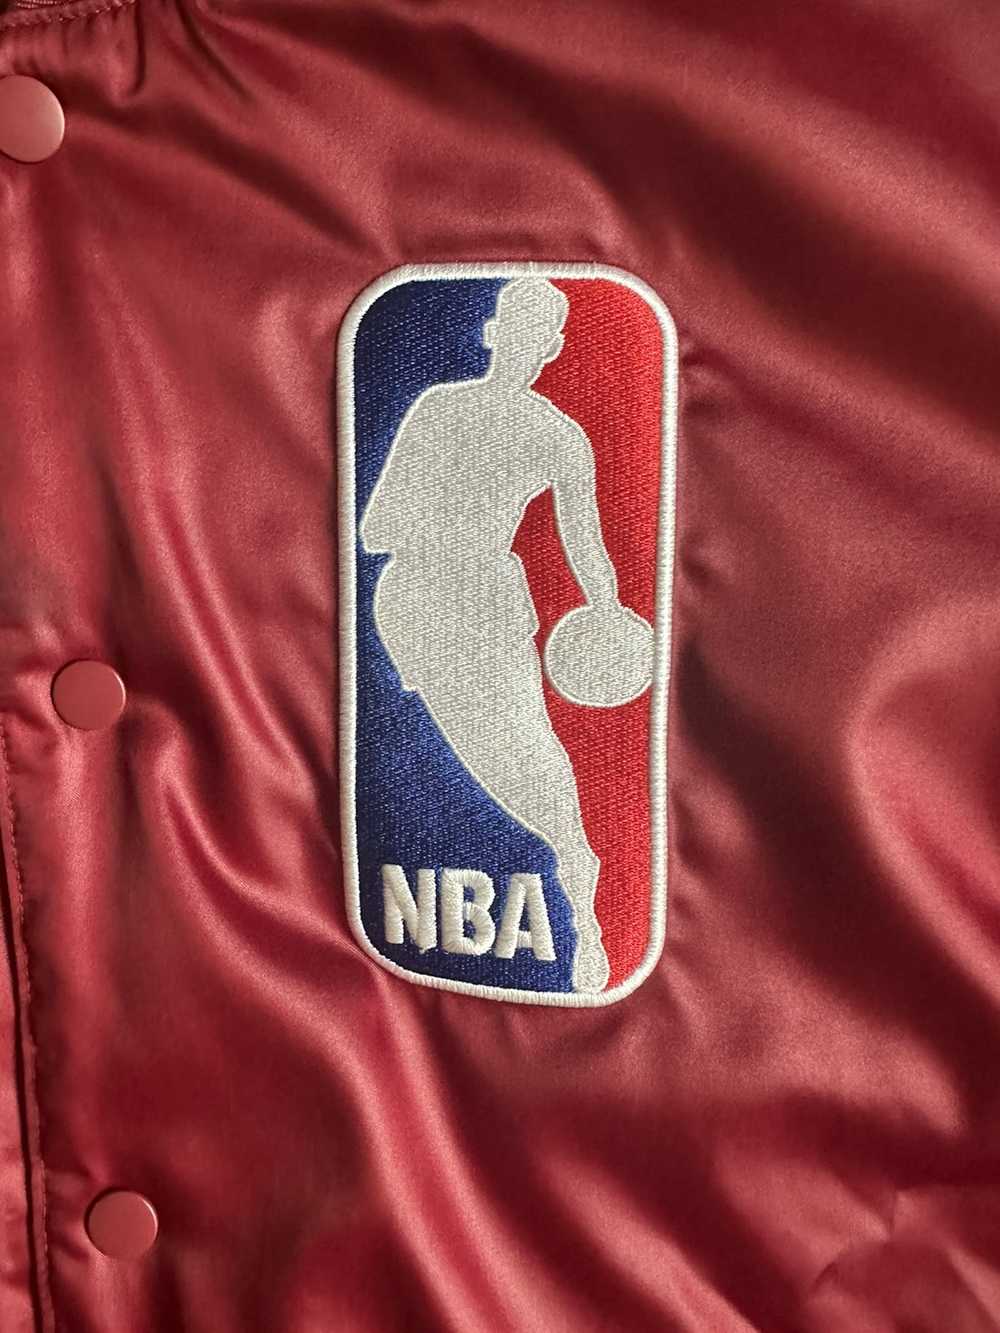 NBA × Nike Nike SB x NBA Letterman Jacket - image 2